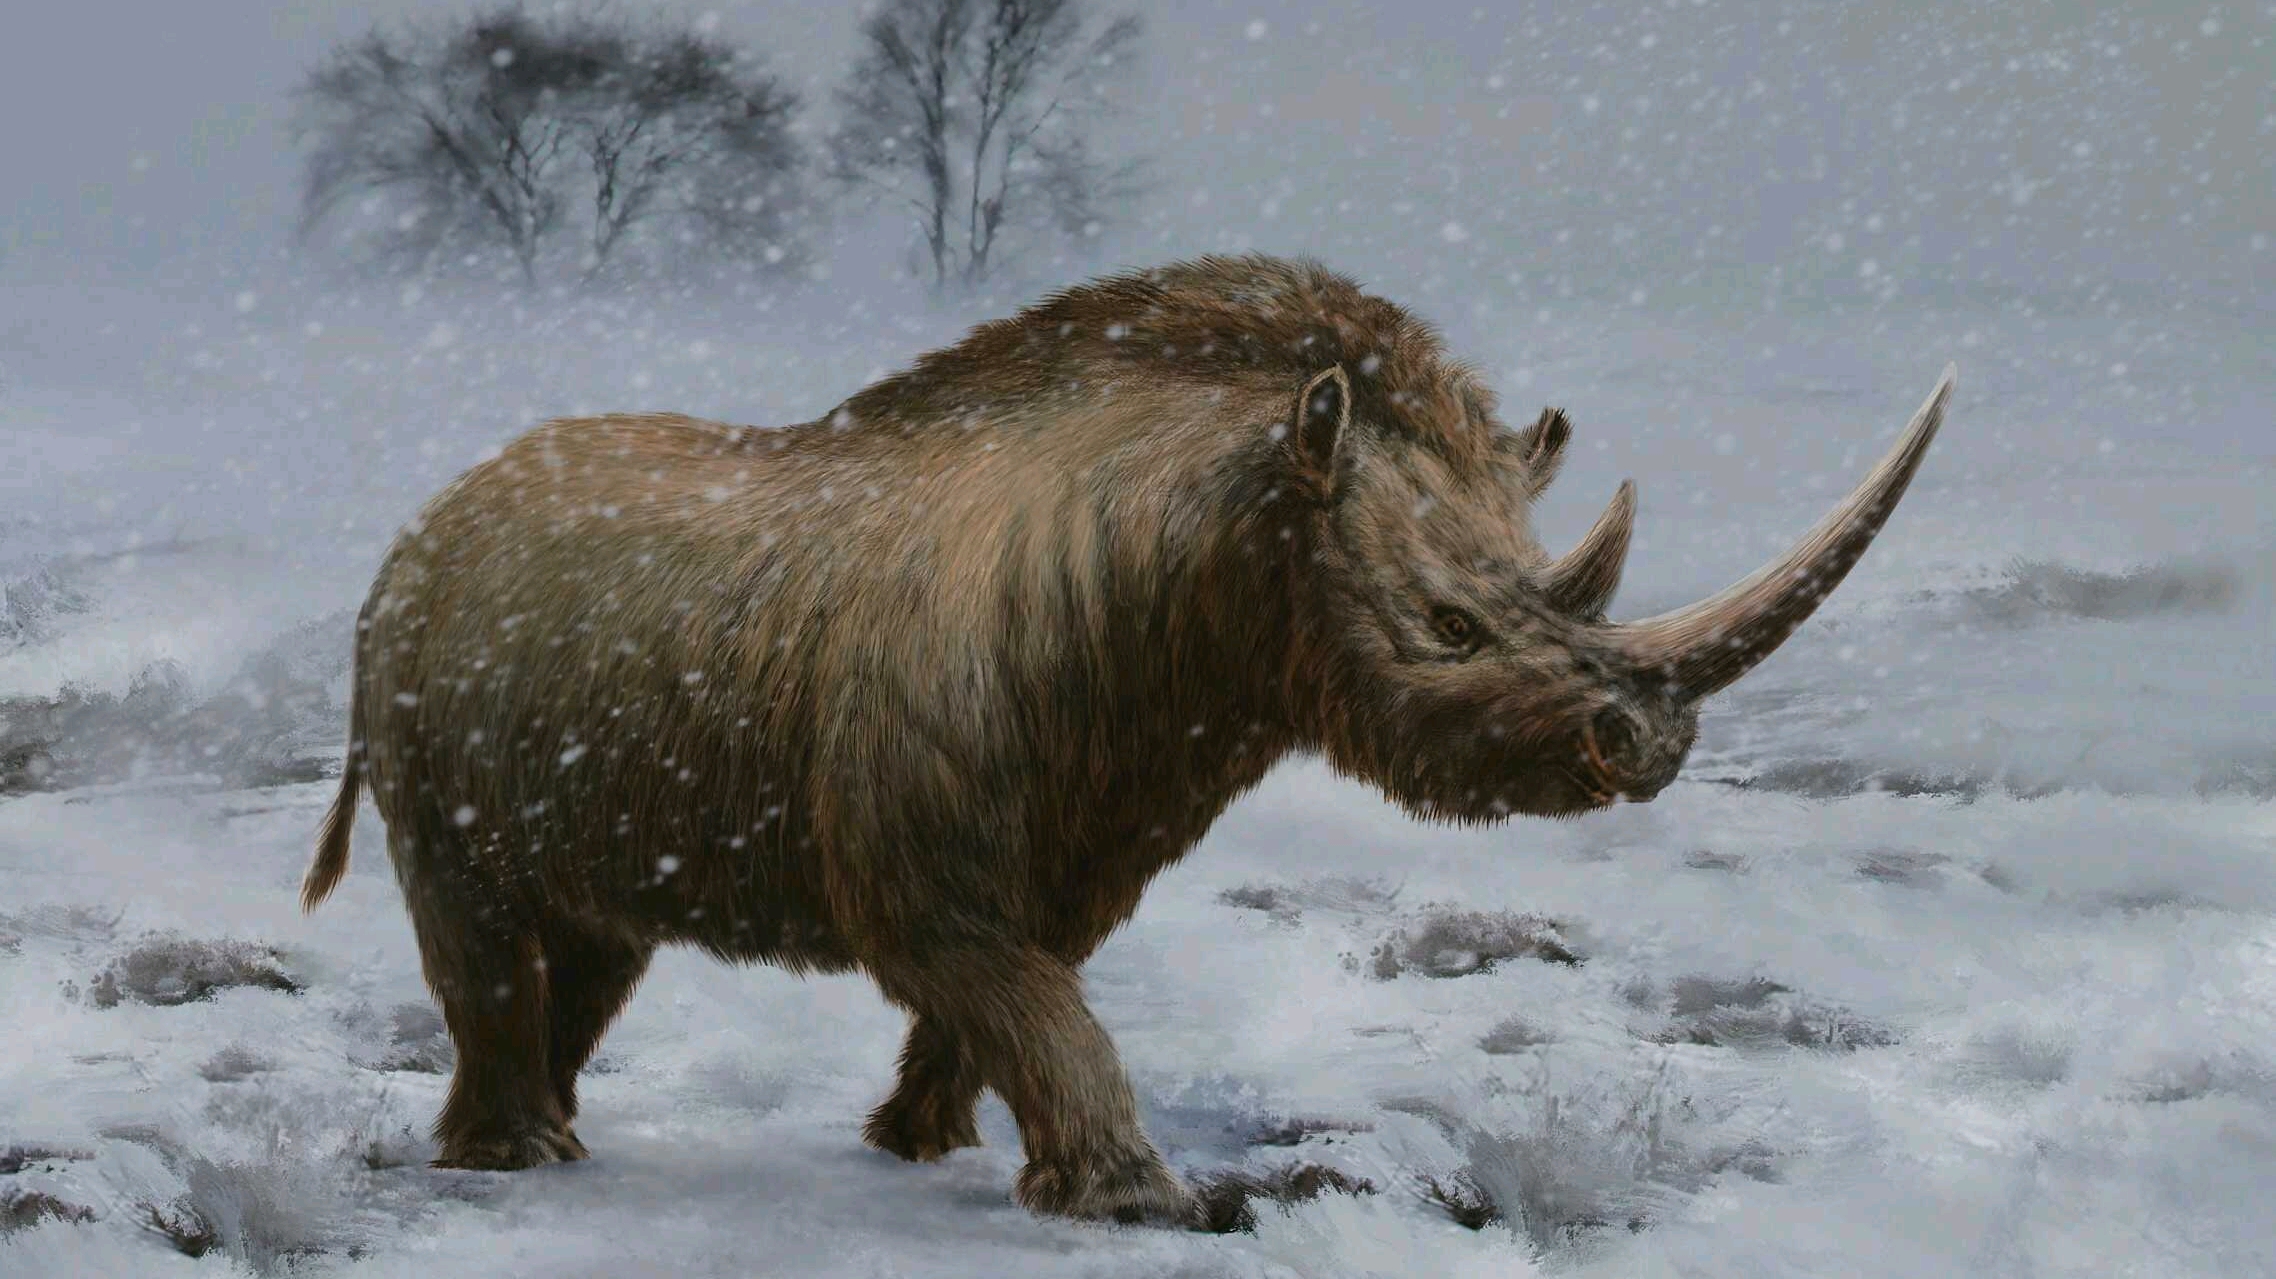 Big Rhino | Africa & Asia - Rhino | Pinterest